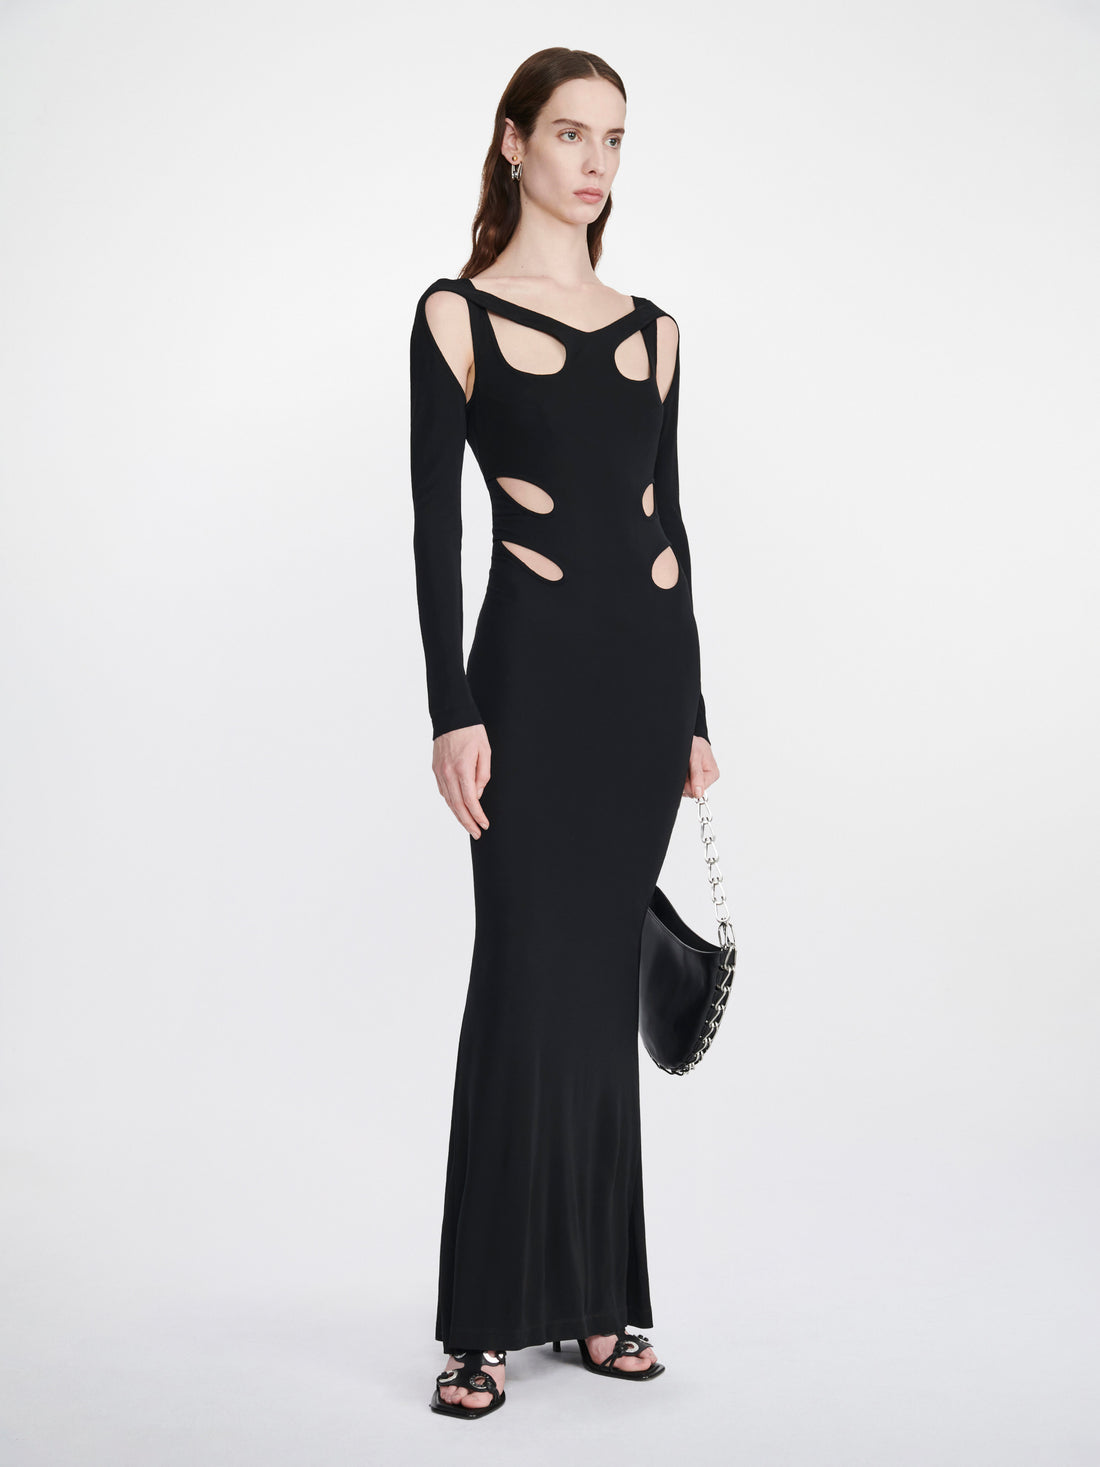 Karlie Kloss Black Backless Bodycon Dress Photoshoot 2023 | SASSY DAILY ...